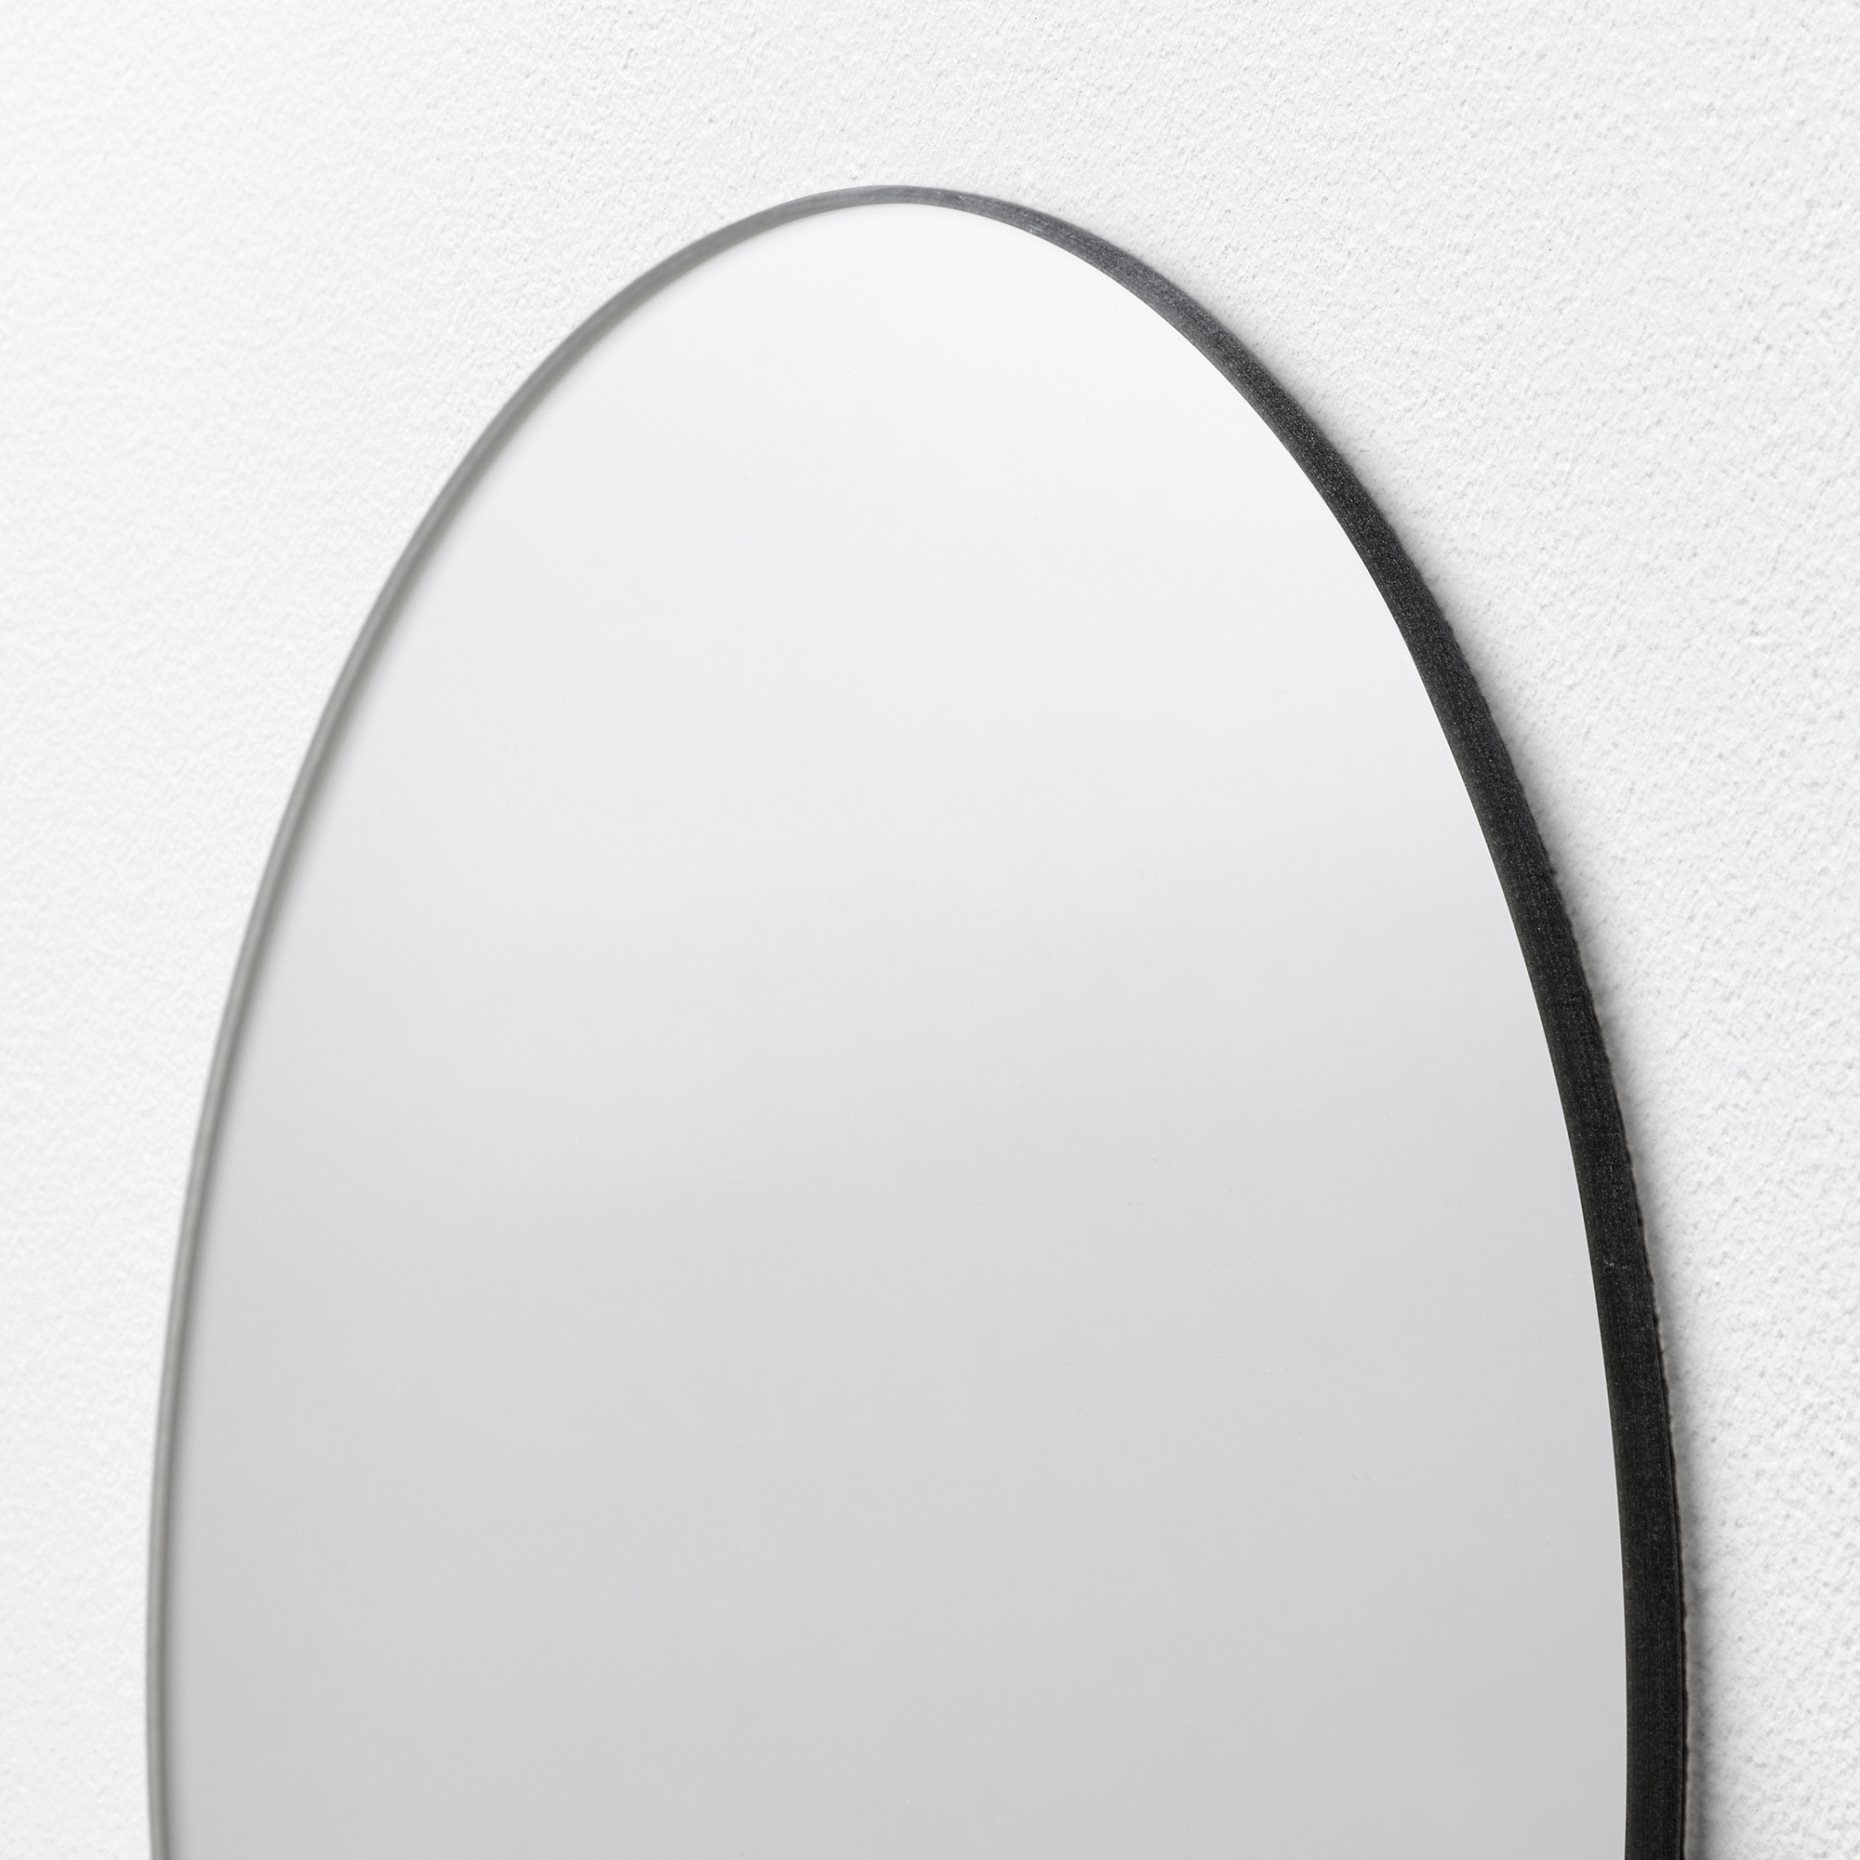 FÄRGEK, διακοσμητικός καθρέφτης, 4 τεμ. 20 cm, 005.171.21